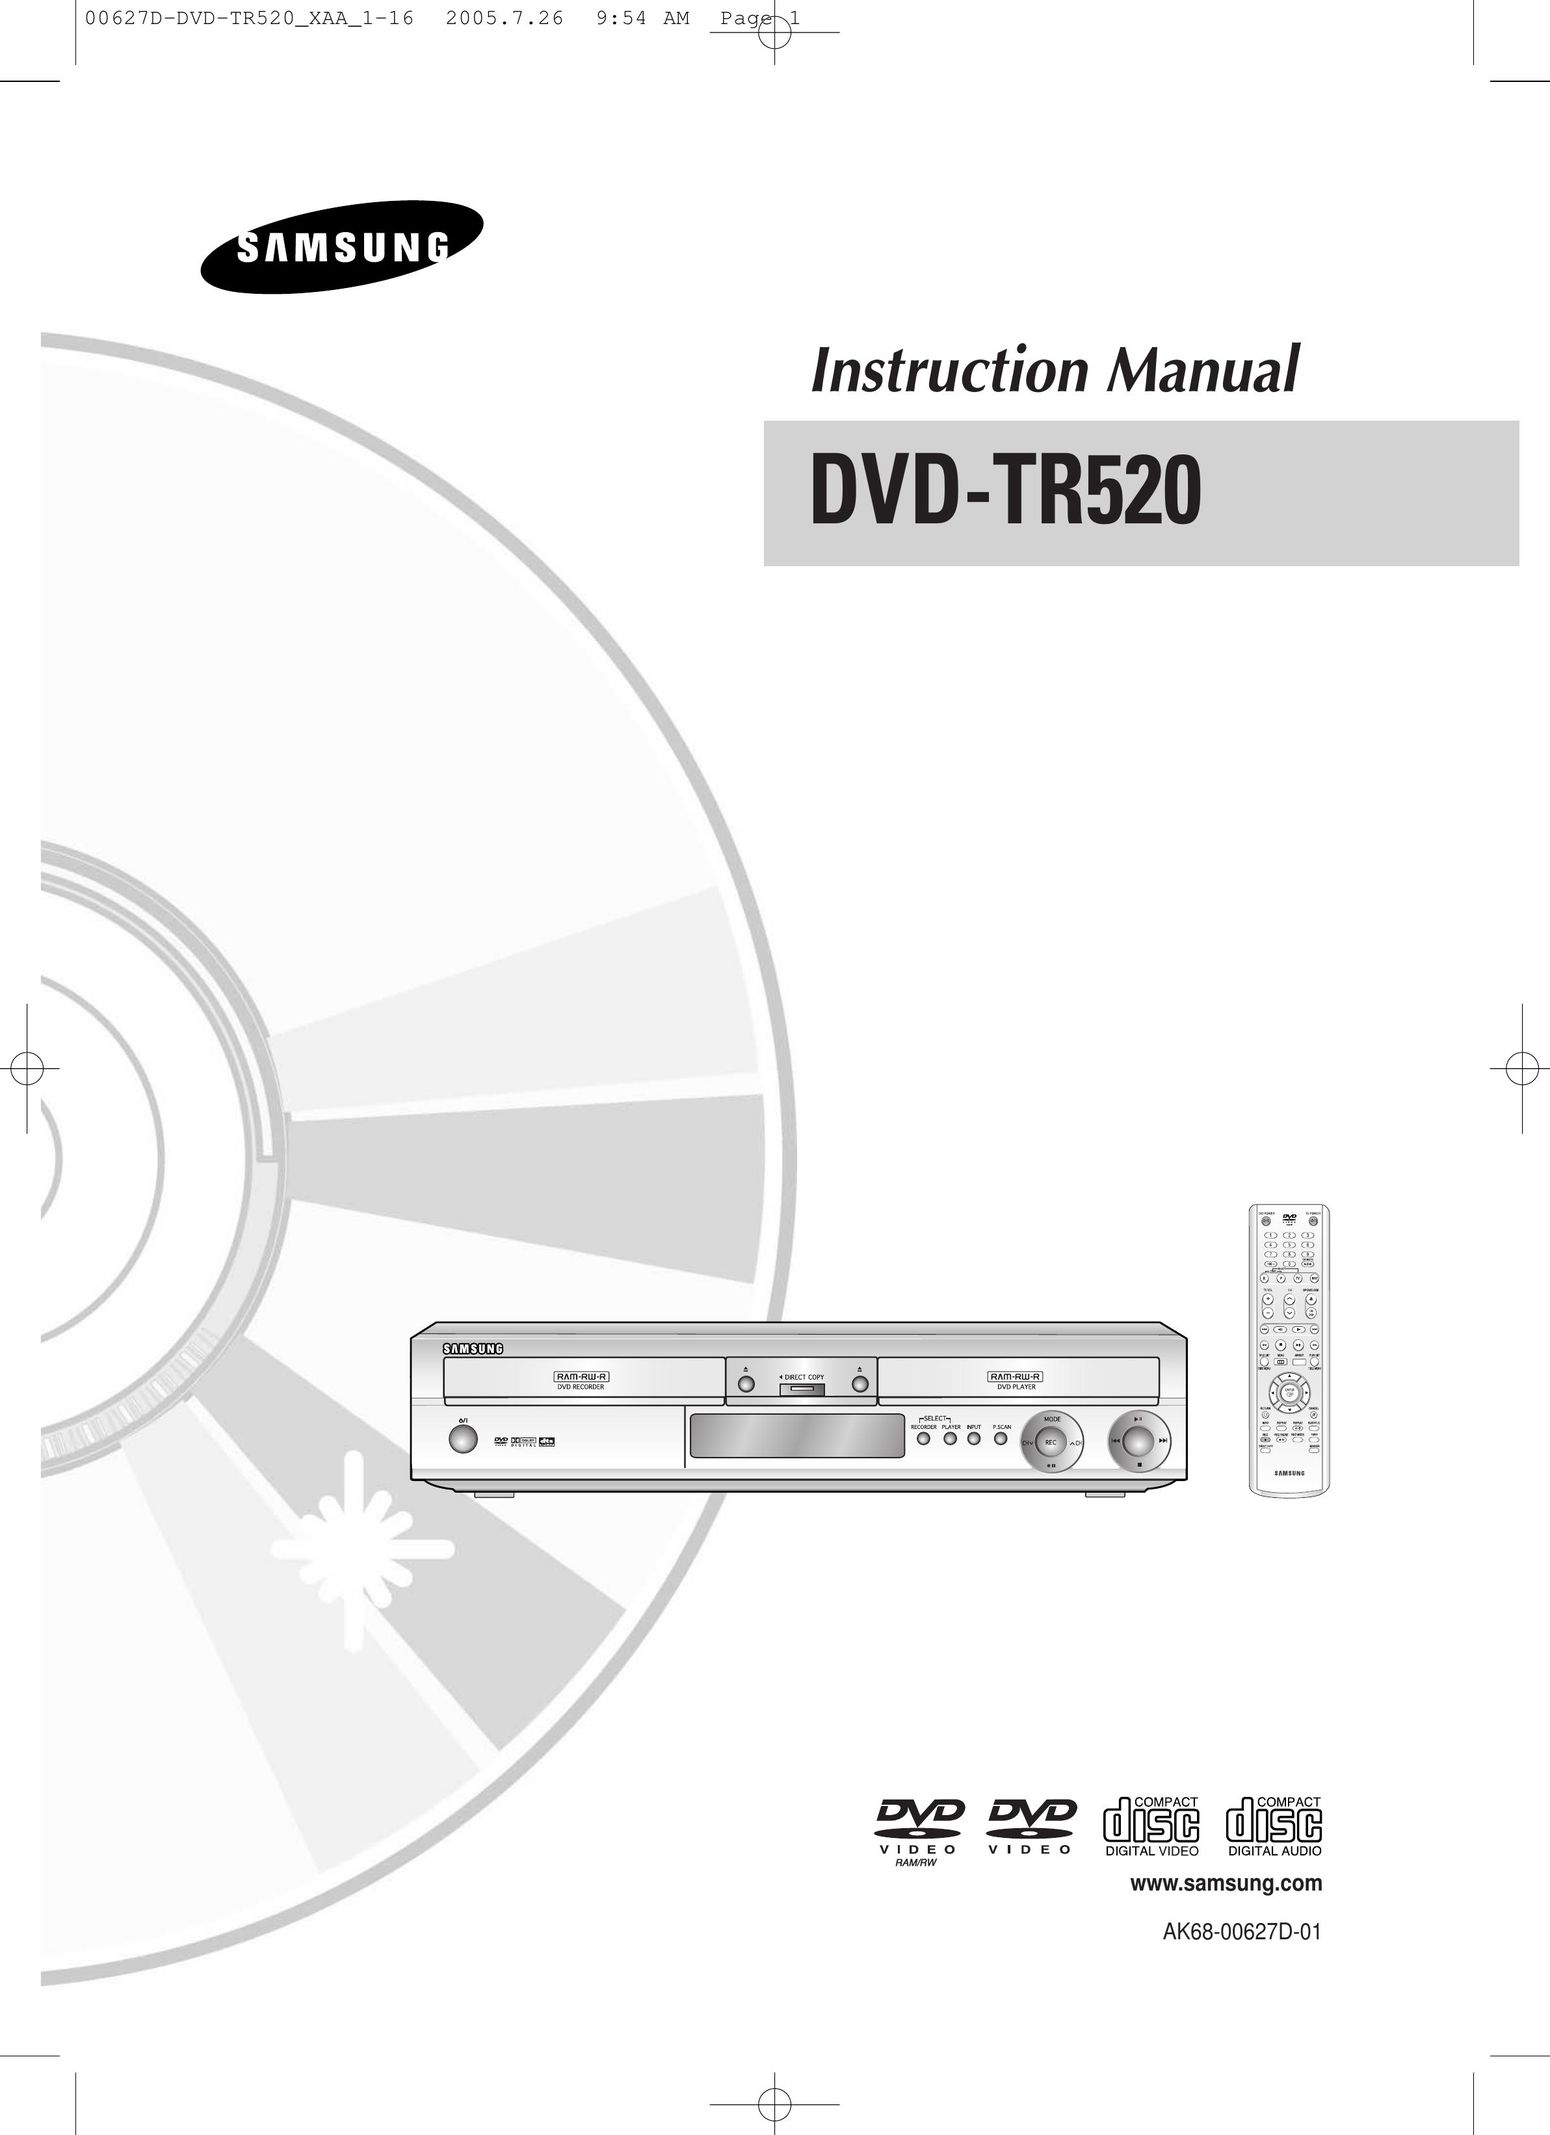 Samsung DVD-TR520 MP3 Player User Manual